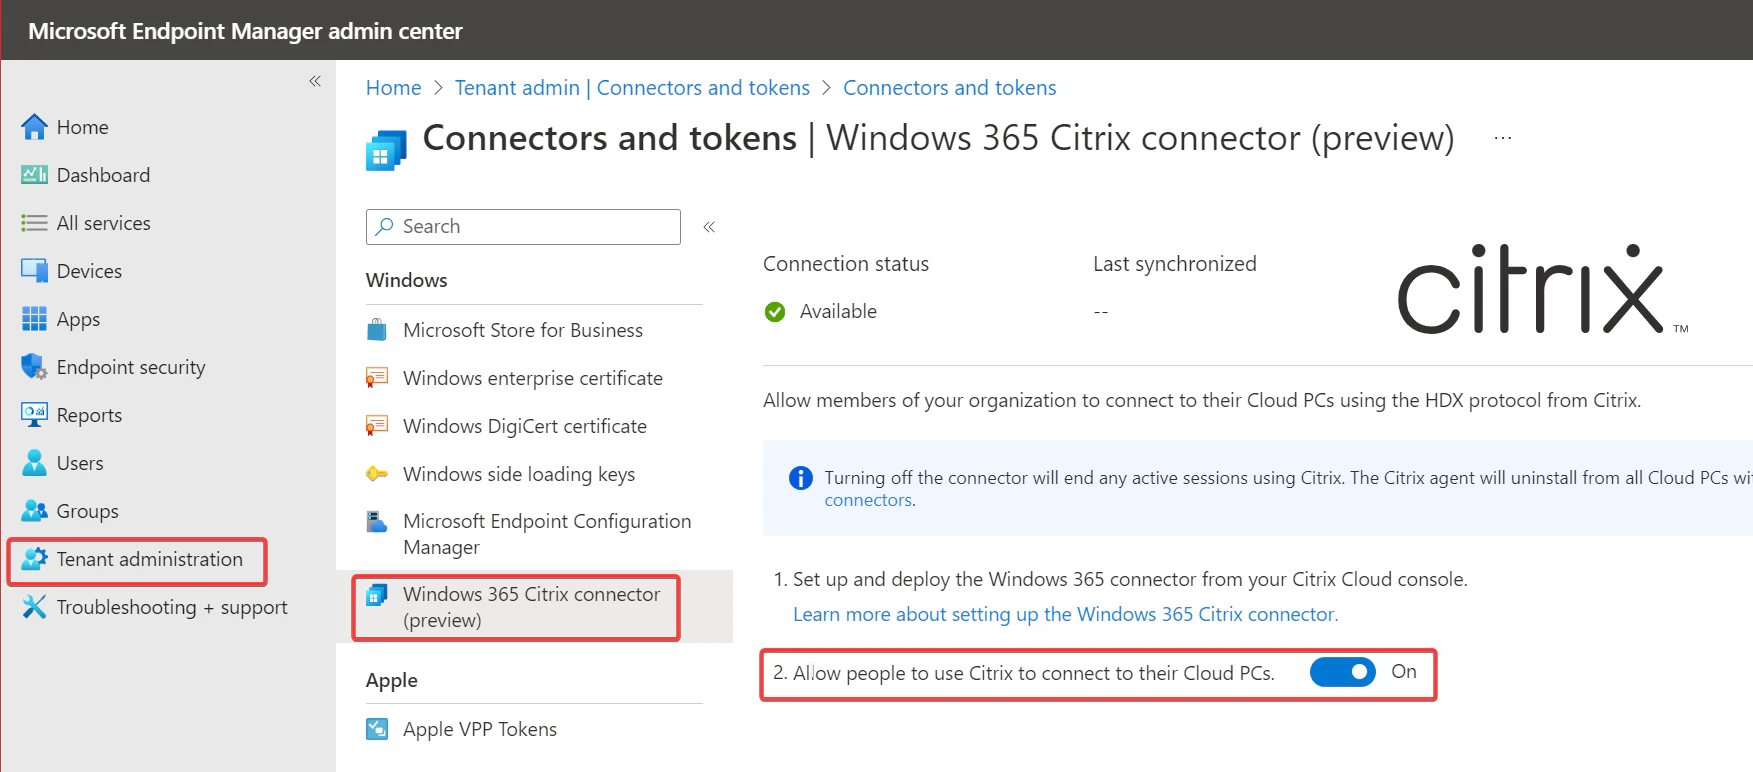 Windows 365 Citrix connector (preview)